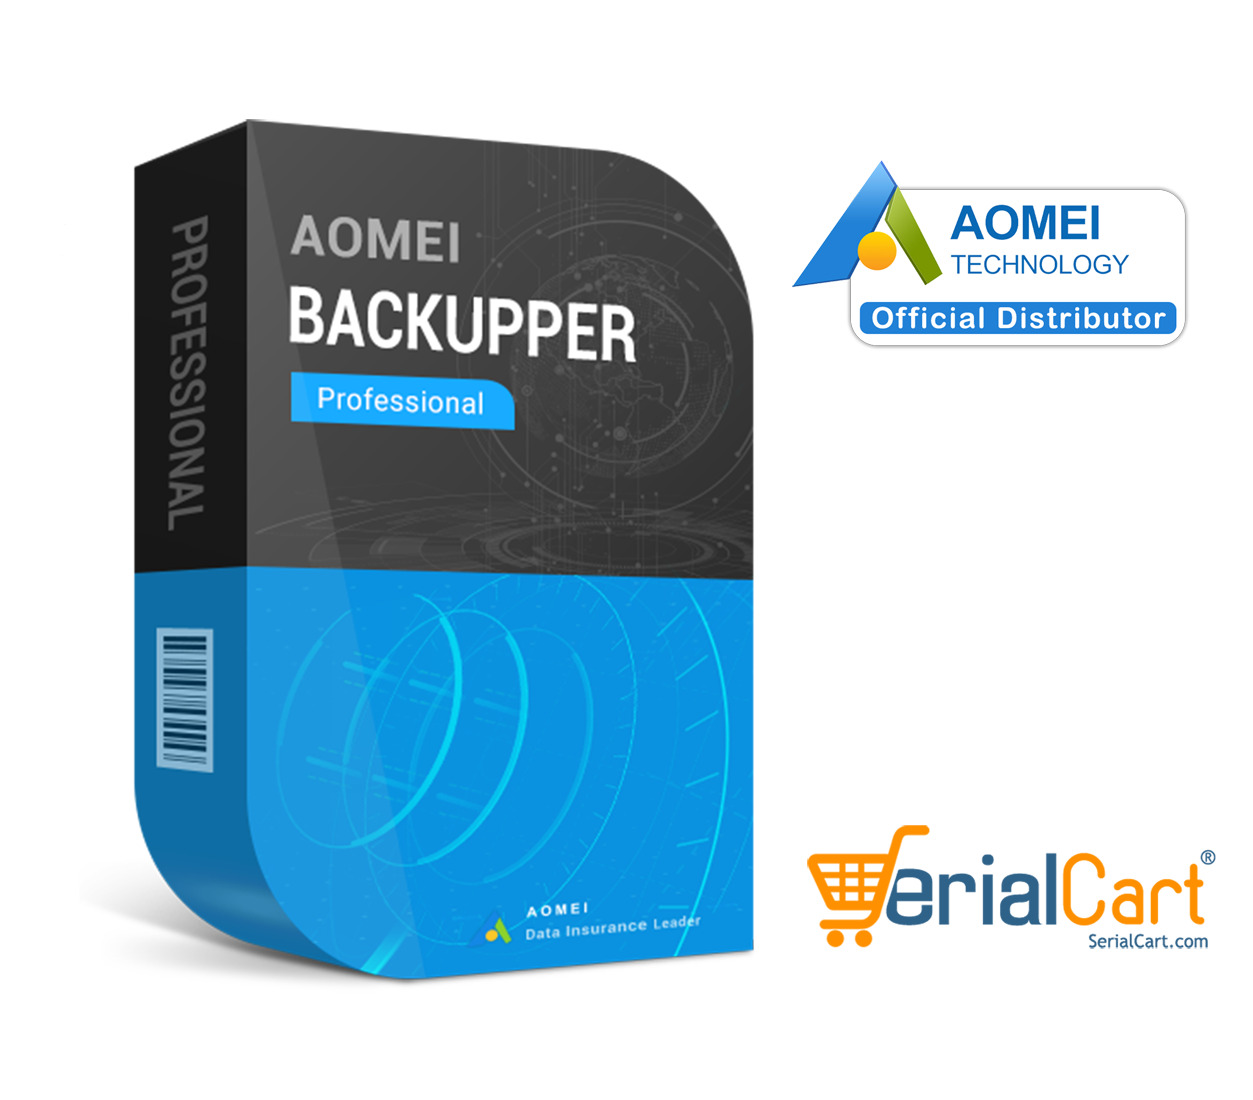 AOMEI Backupper Professional for 2 PC - Latest Version